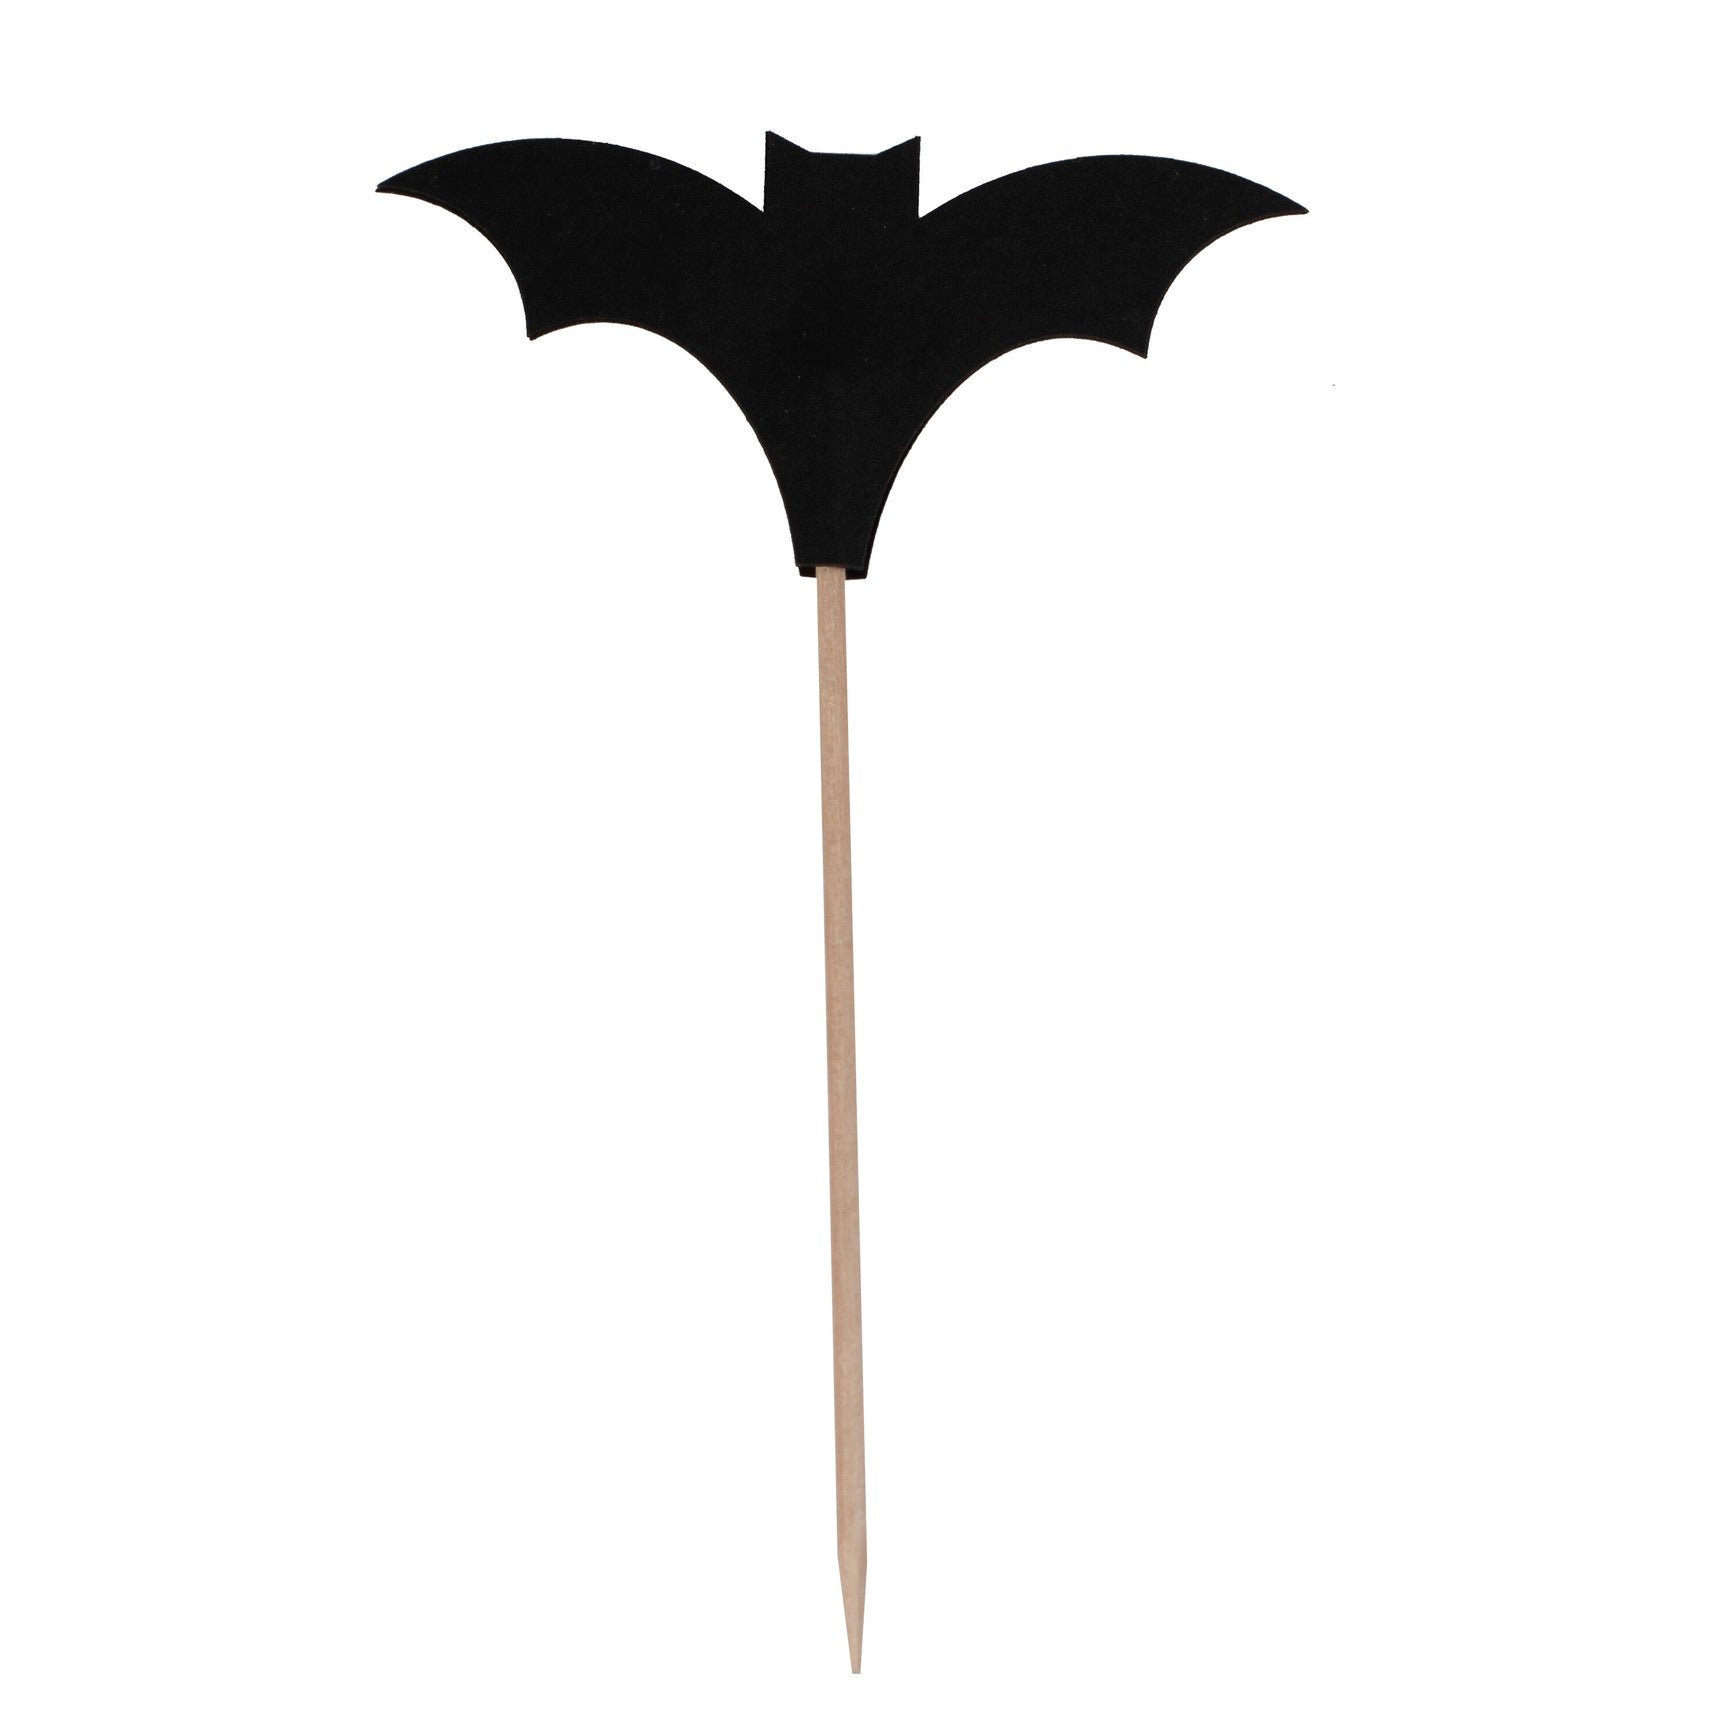 Halloween Bat Cocktail Party Sticks 12pcs